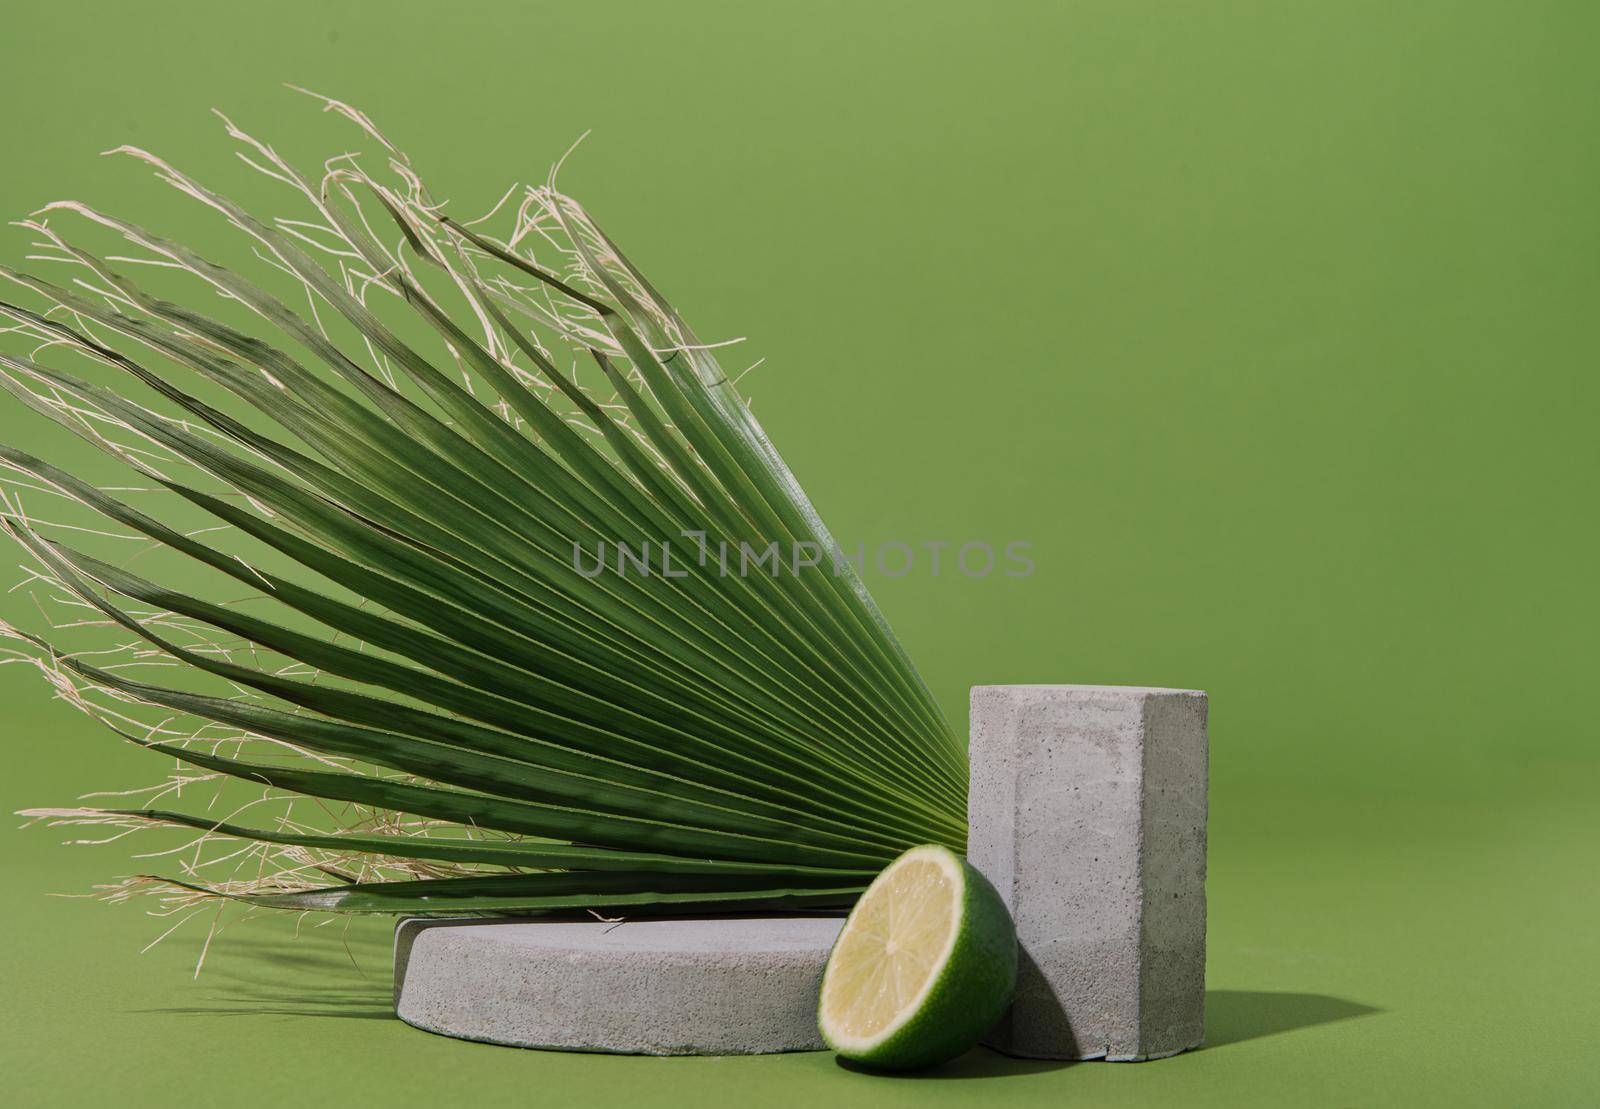 mockup with palm leaf, lime half and concrete shapes. High quality photo